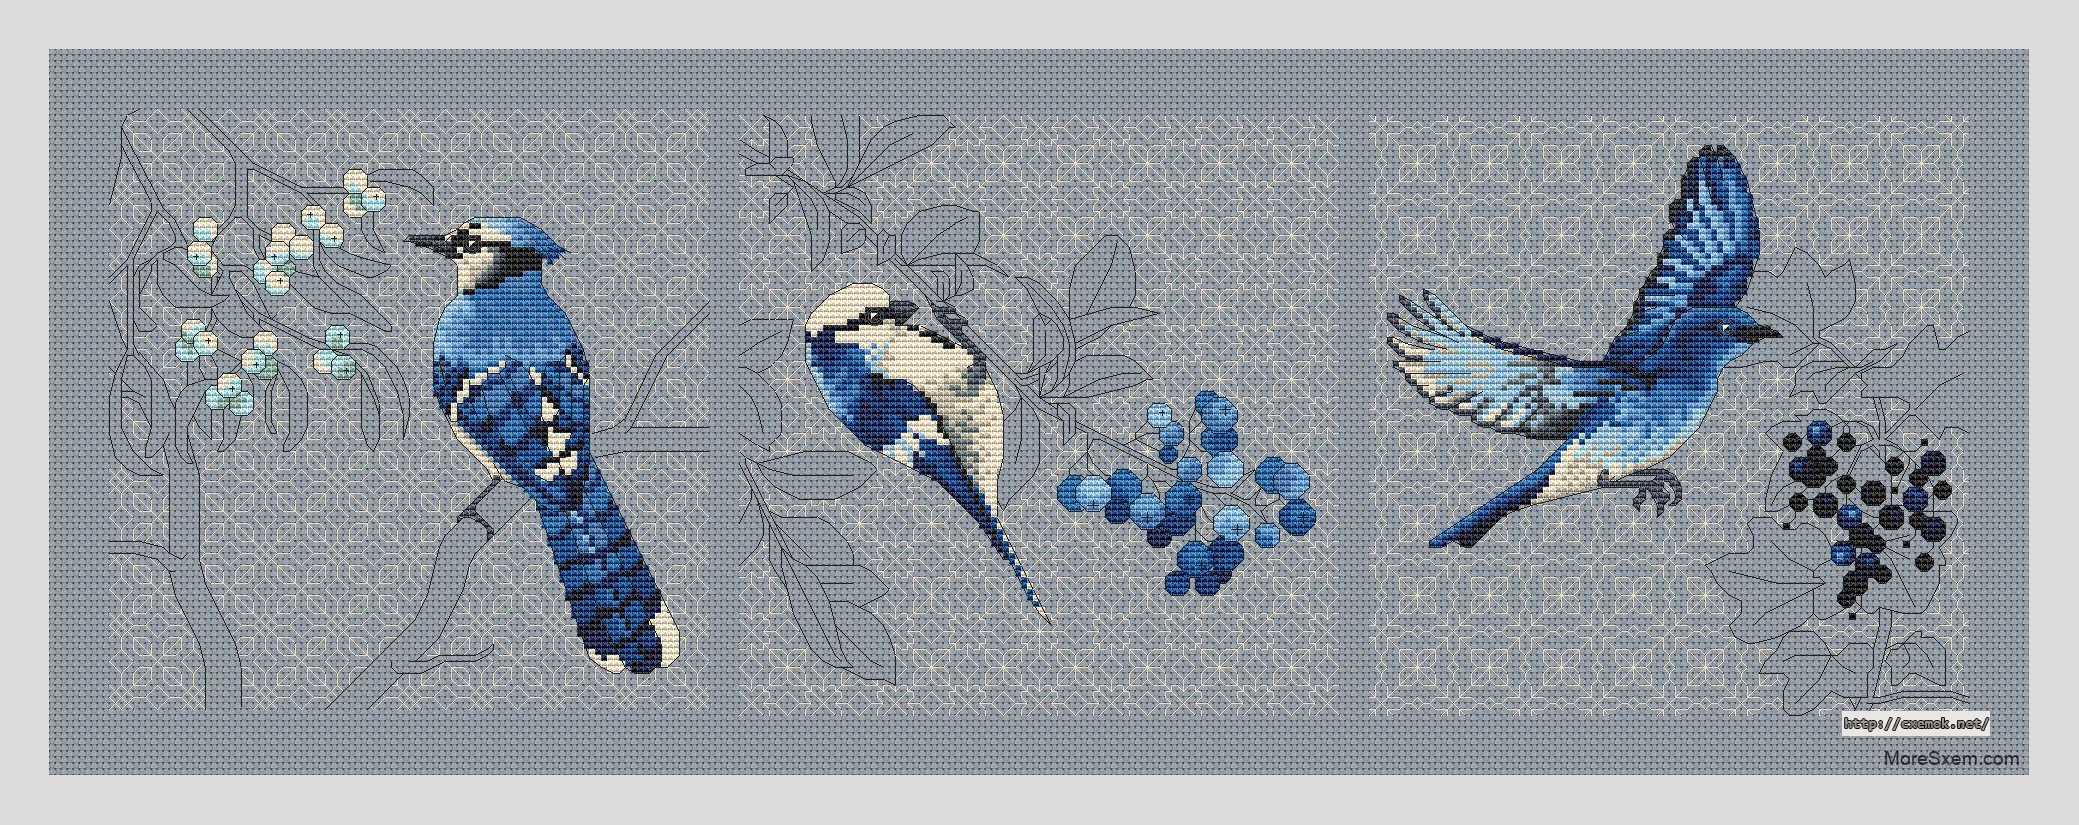 Download embroidery patterns by cross-stitch  - Синие птички